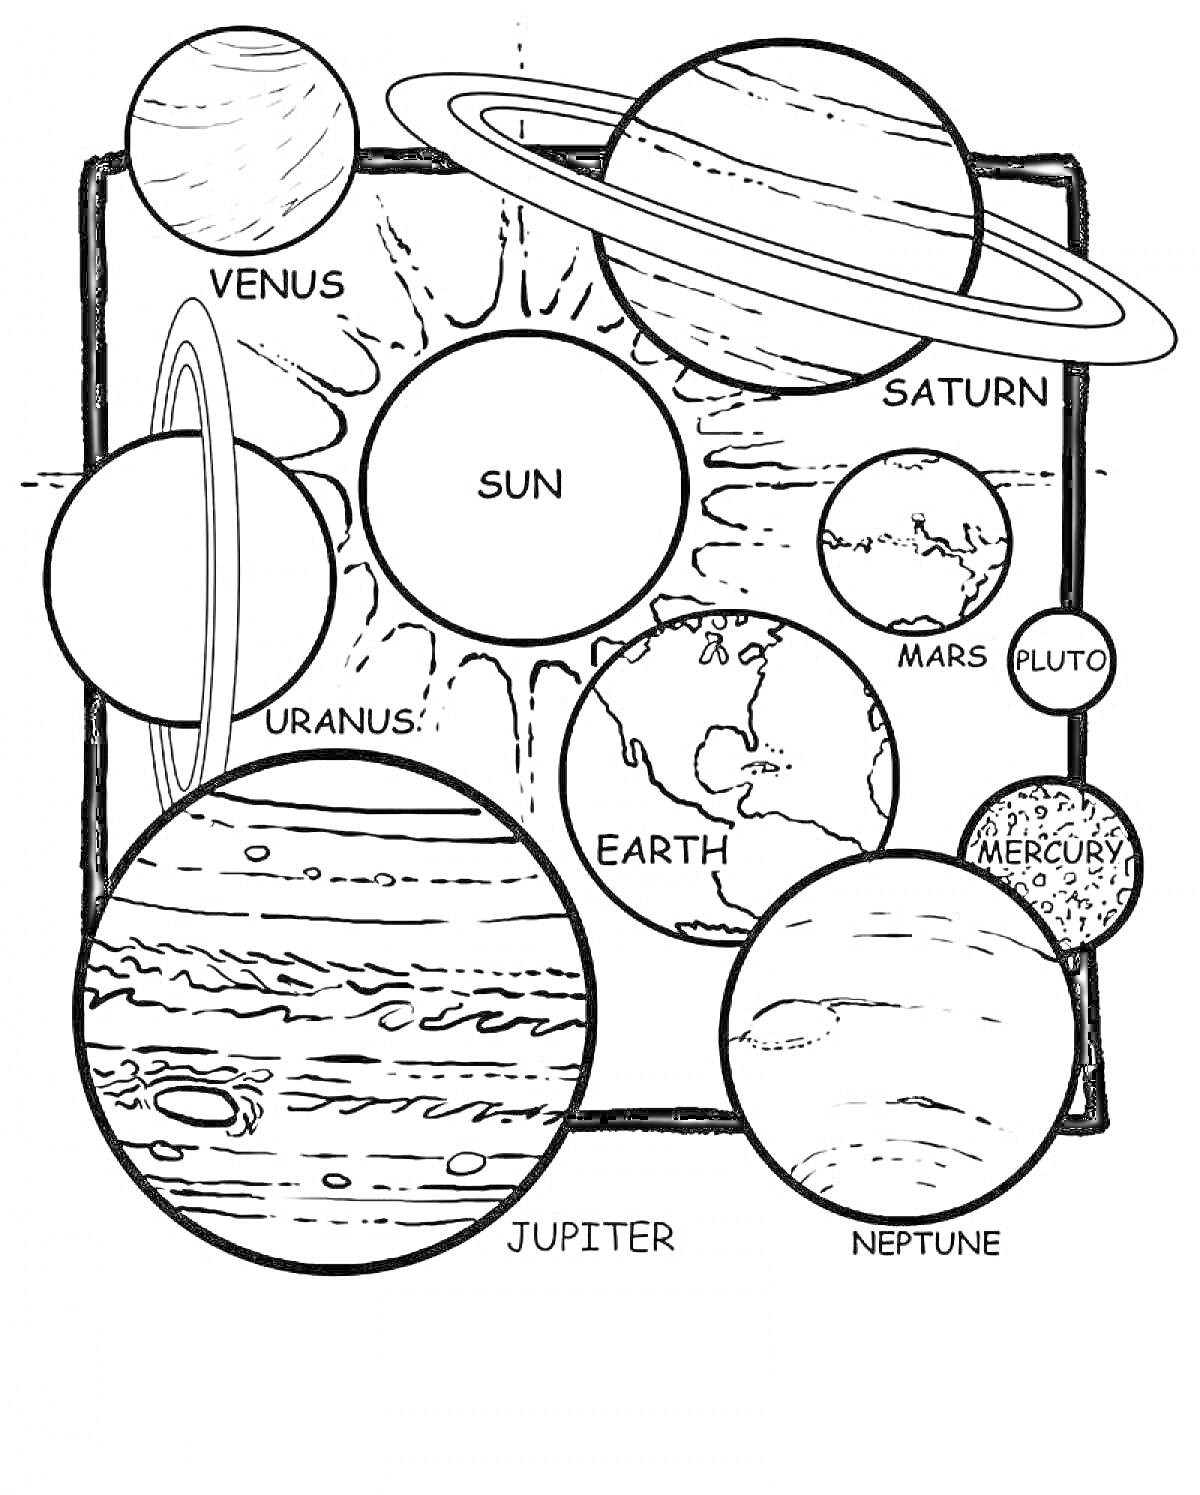 Раскраска Солнечная система с Солнцем, планетами (Венера, Сатурн, Уран, Земля, Юпитер, Нептун, Марс, Плутон, Меркурий)